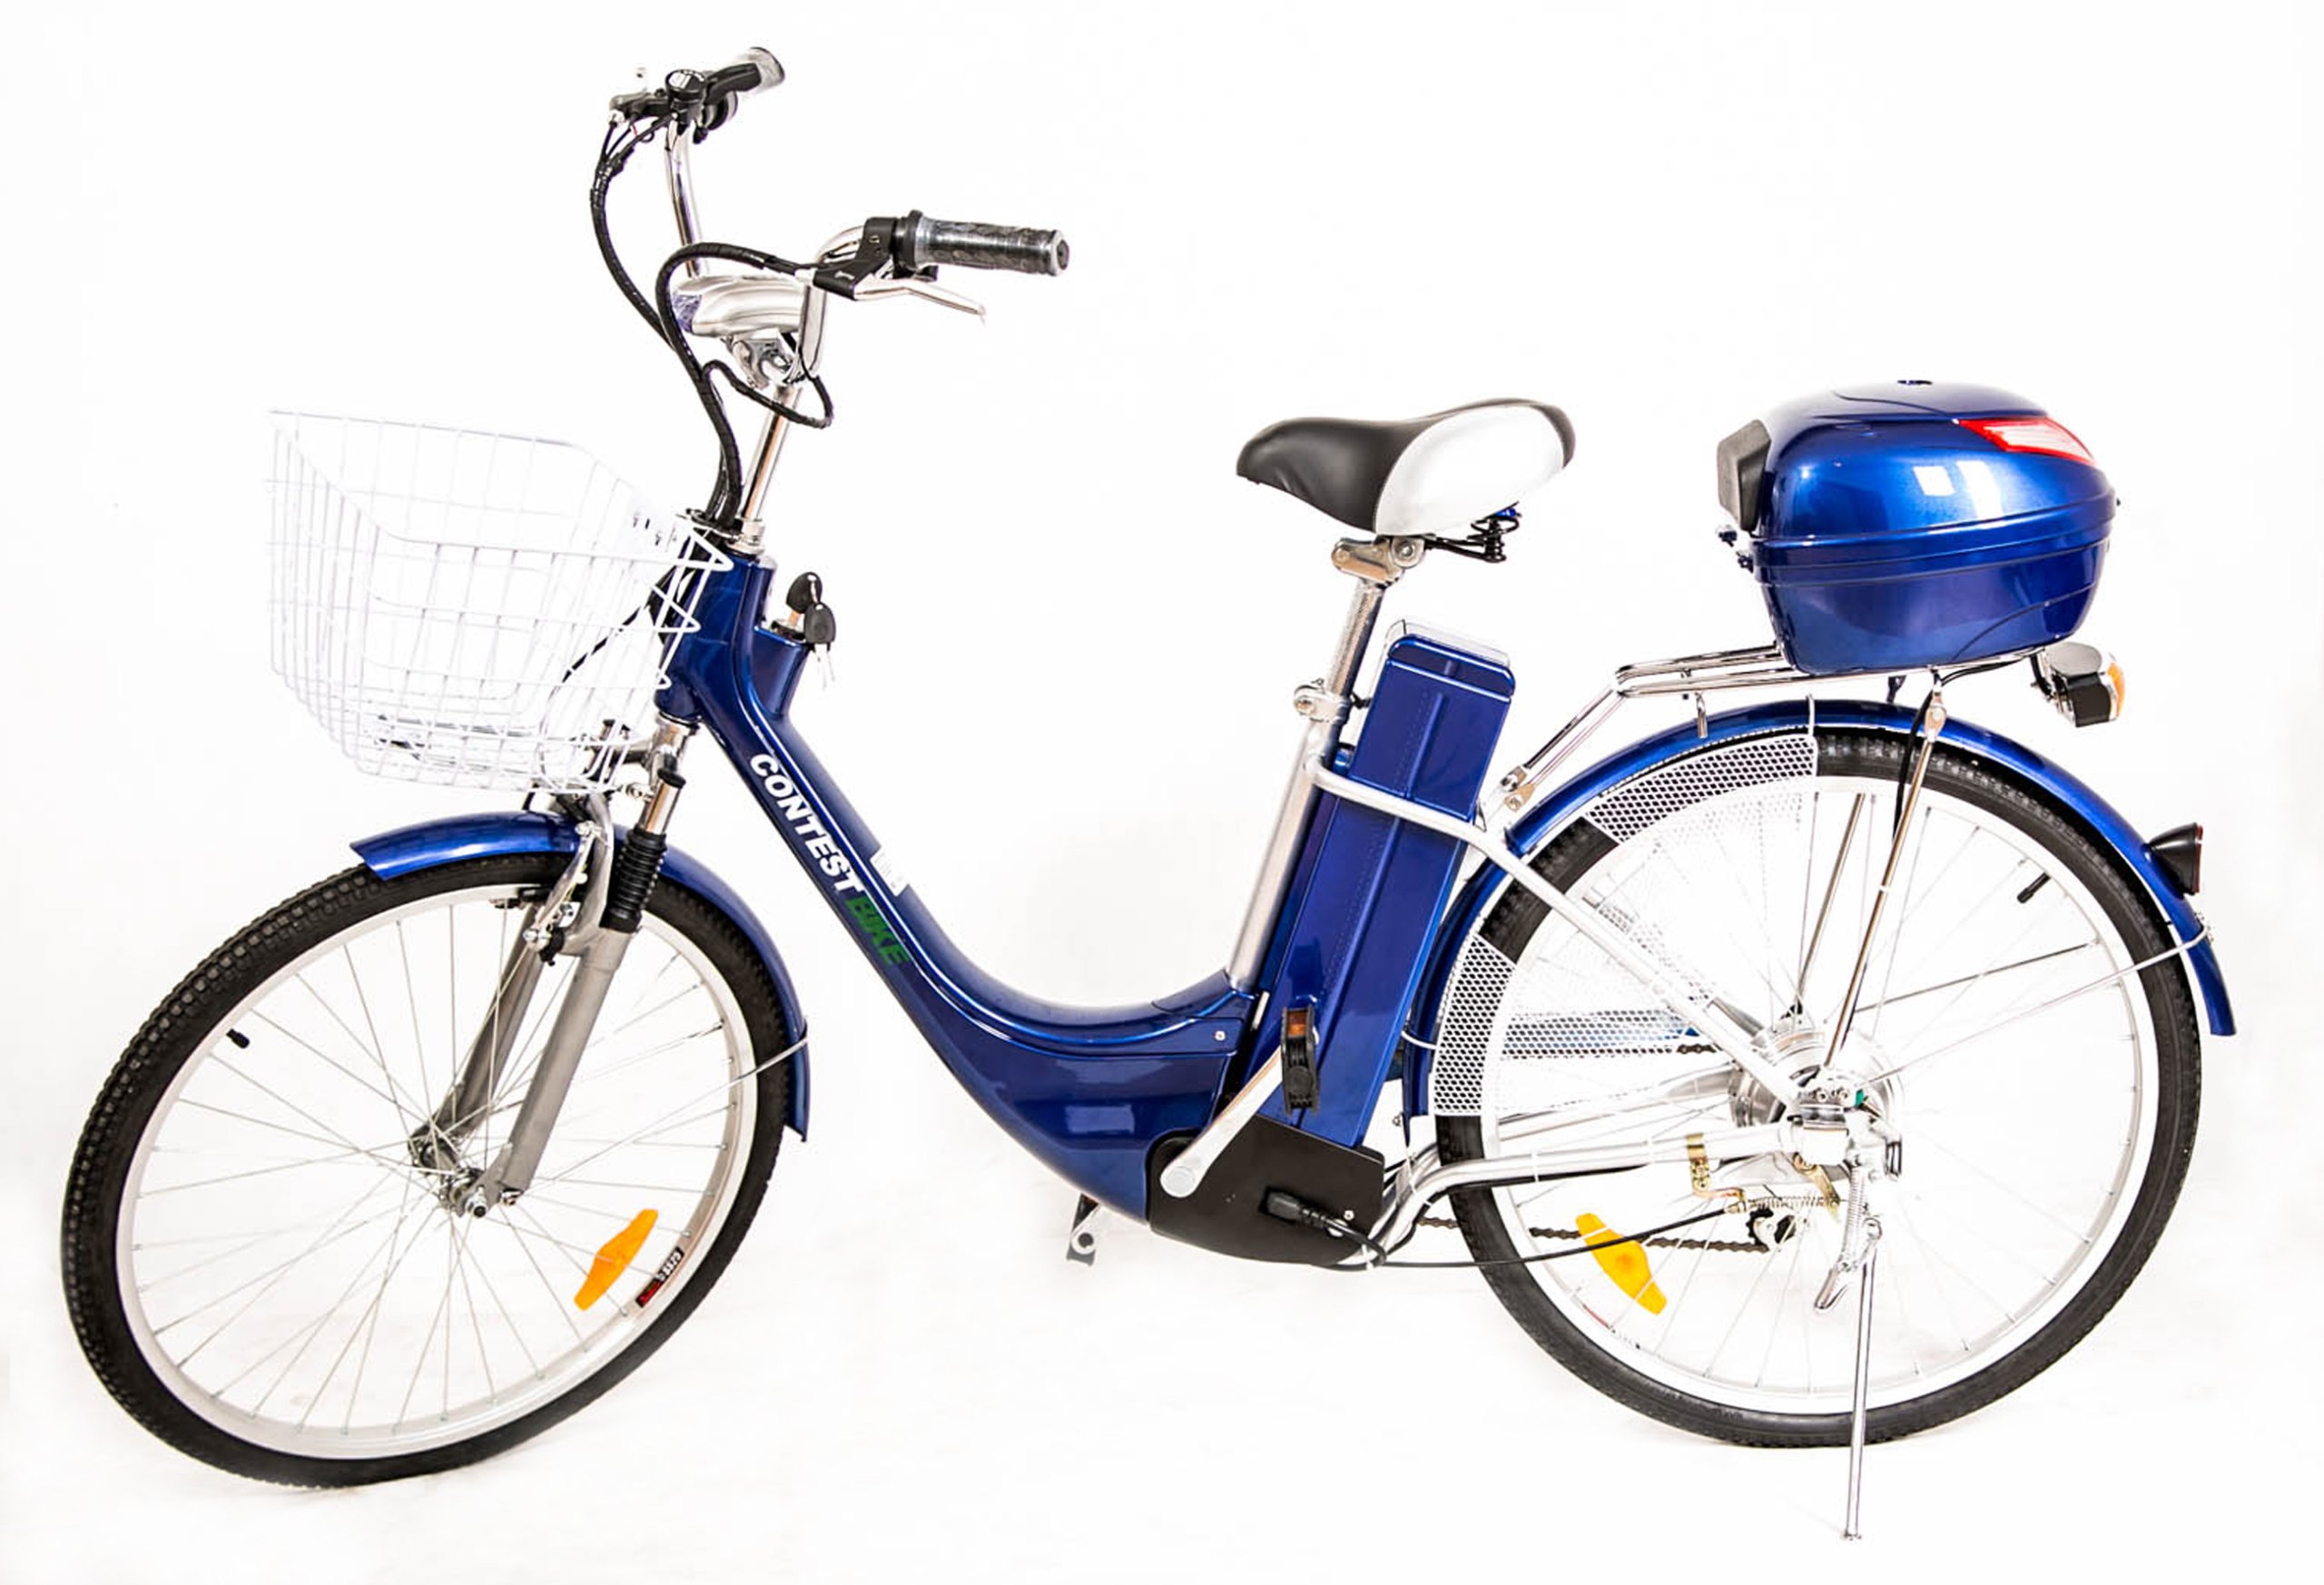 Электровелосипед купить в иваново 250вт. Электровелосипед Carrefour 250w. Электровелосипед Duet (250w 36v). Электровелосипед 36в 250вт Хуалонг. Электровелосипед Stark 250 ватт.